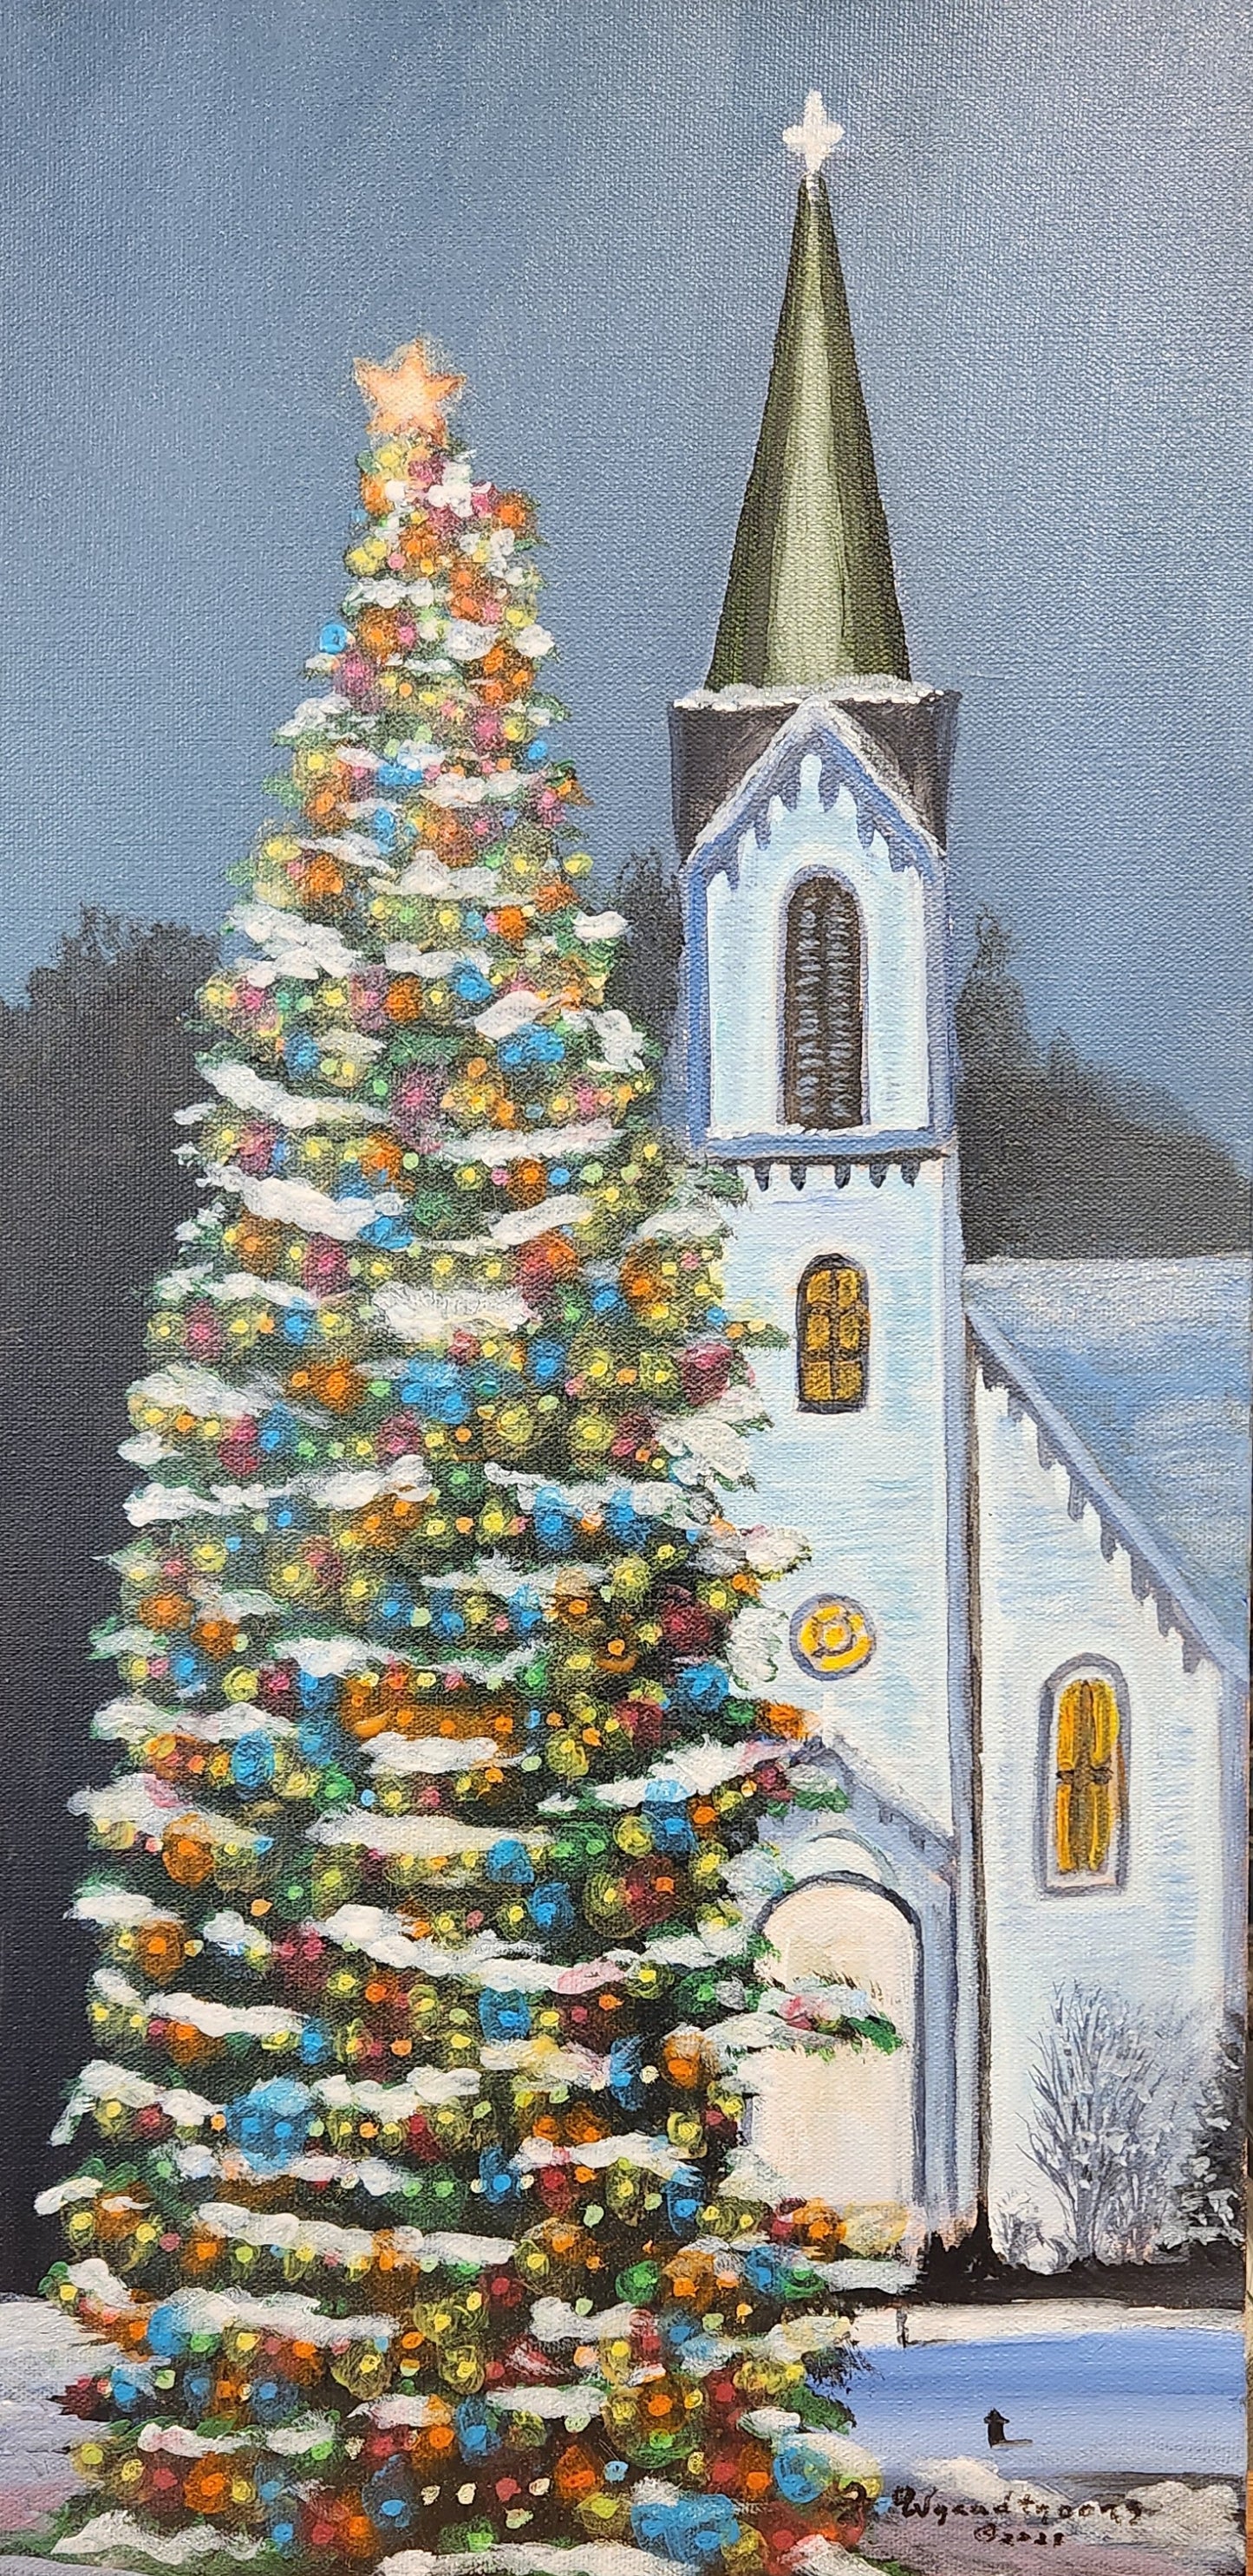 "Harbor Springs Christmas"